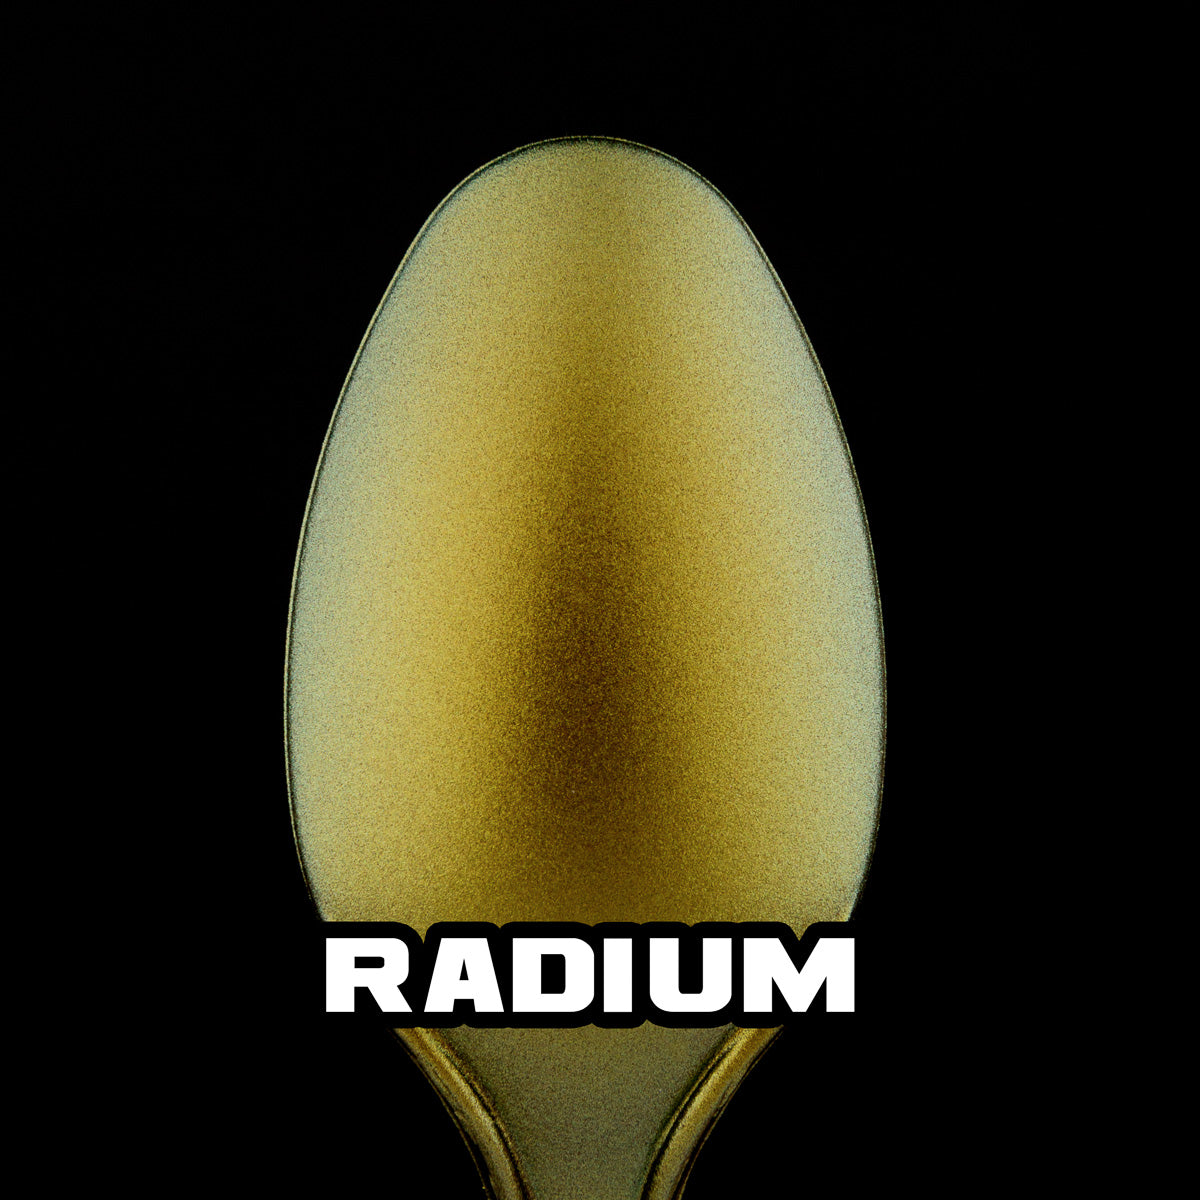 spoon with green and yellow turboshift paint (Radium)